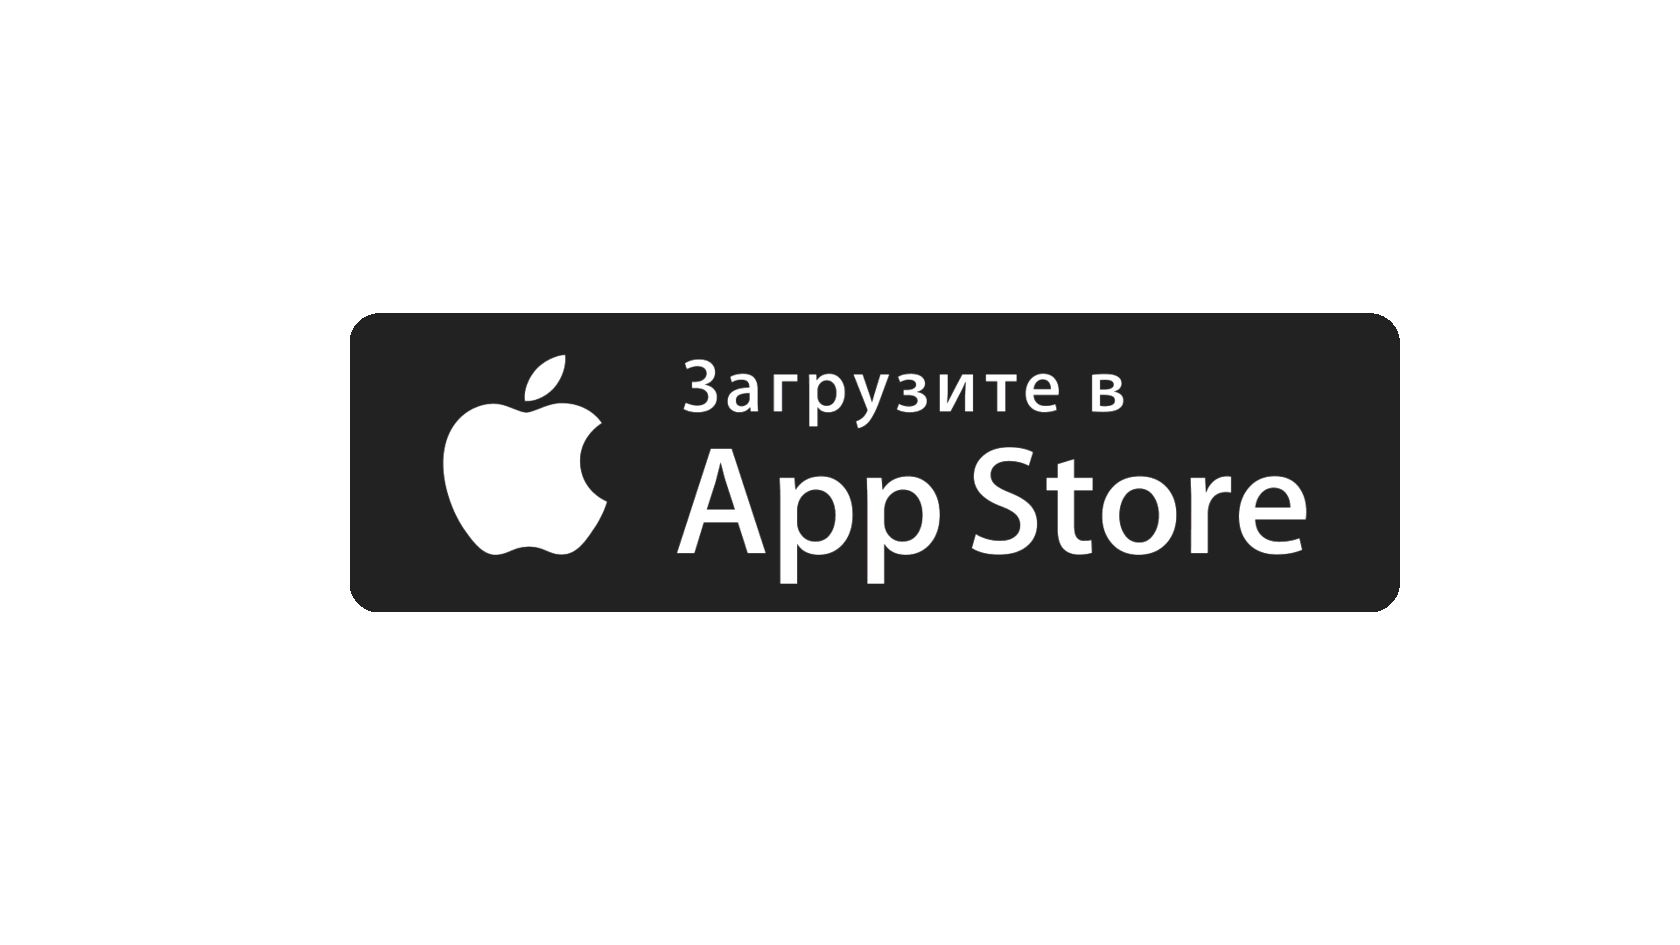 App store 5. Иконка app Store. Загрузите в app Store. Значок доступно в app Store. Эпл сторе и гугл плей.